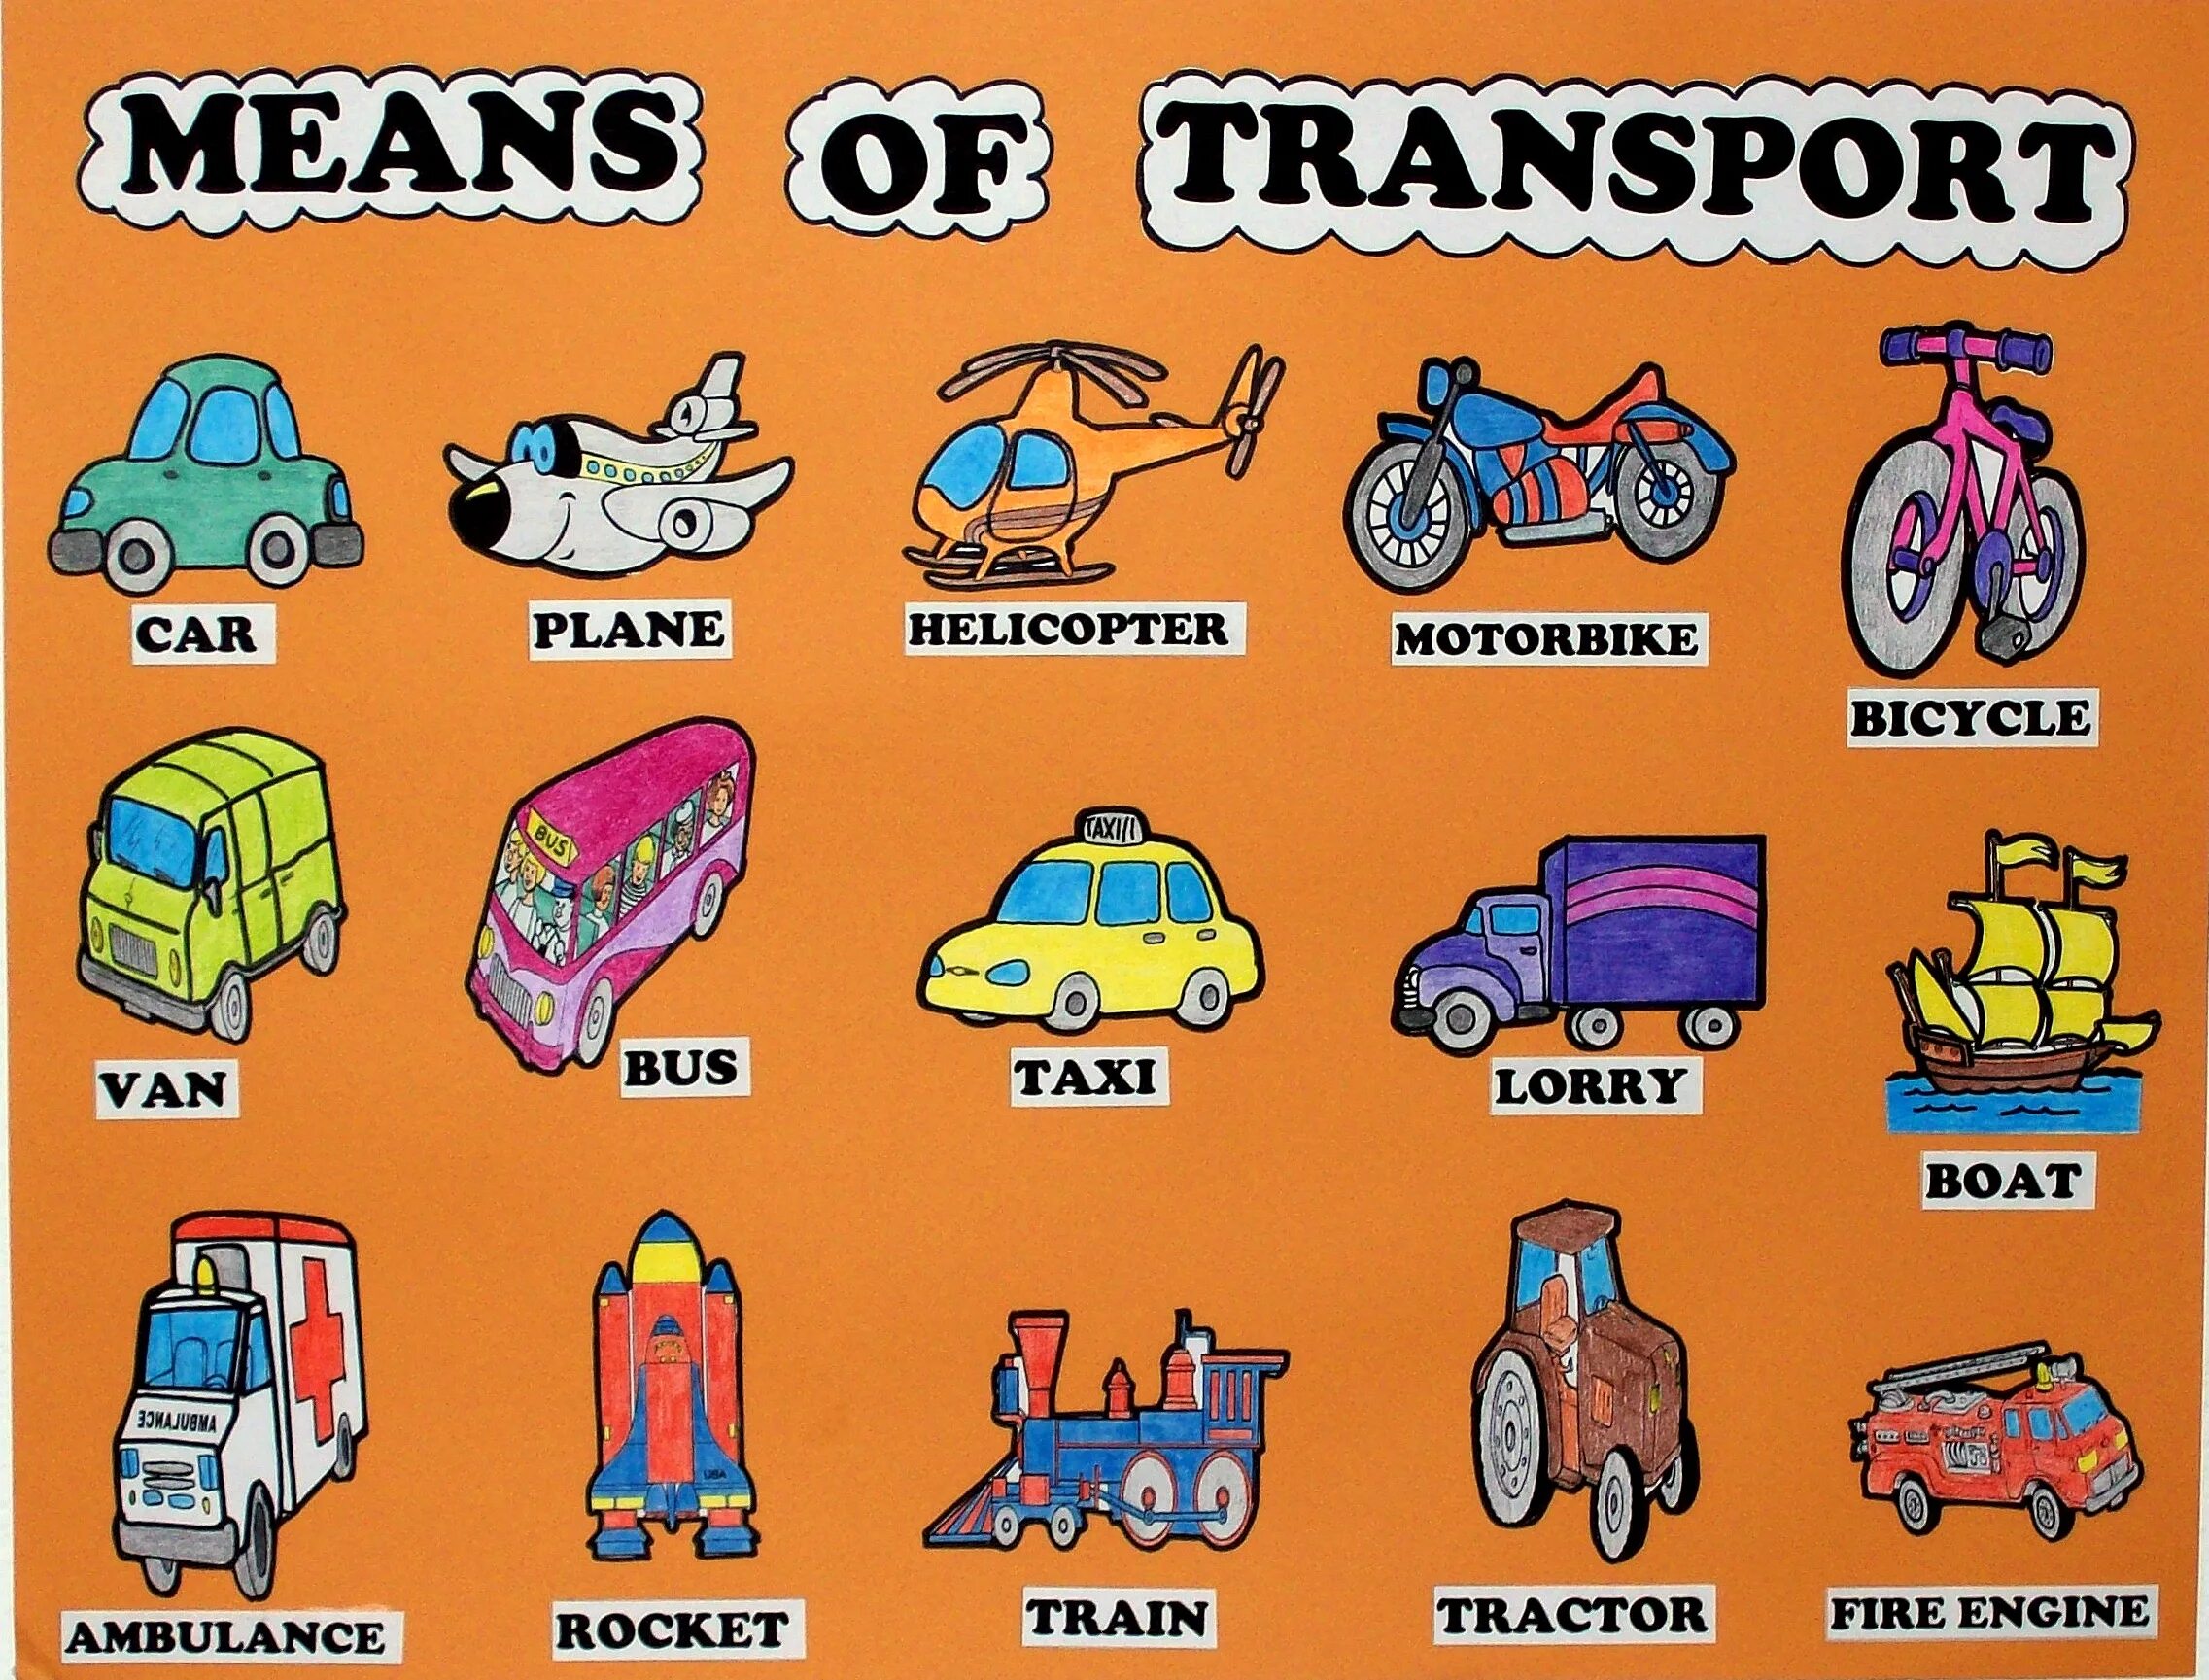 Transport picture. Транспорт на английском. Транспорты на АГЛ. Транспорт на английском для детей. Транспорт слова на английском.